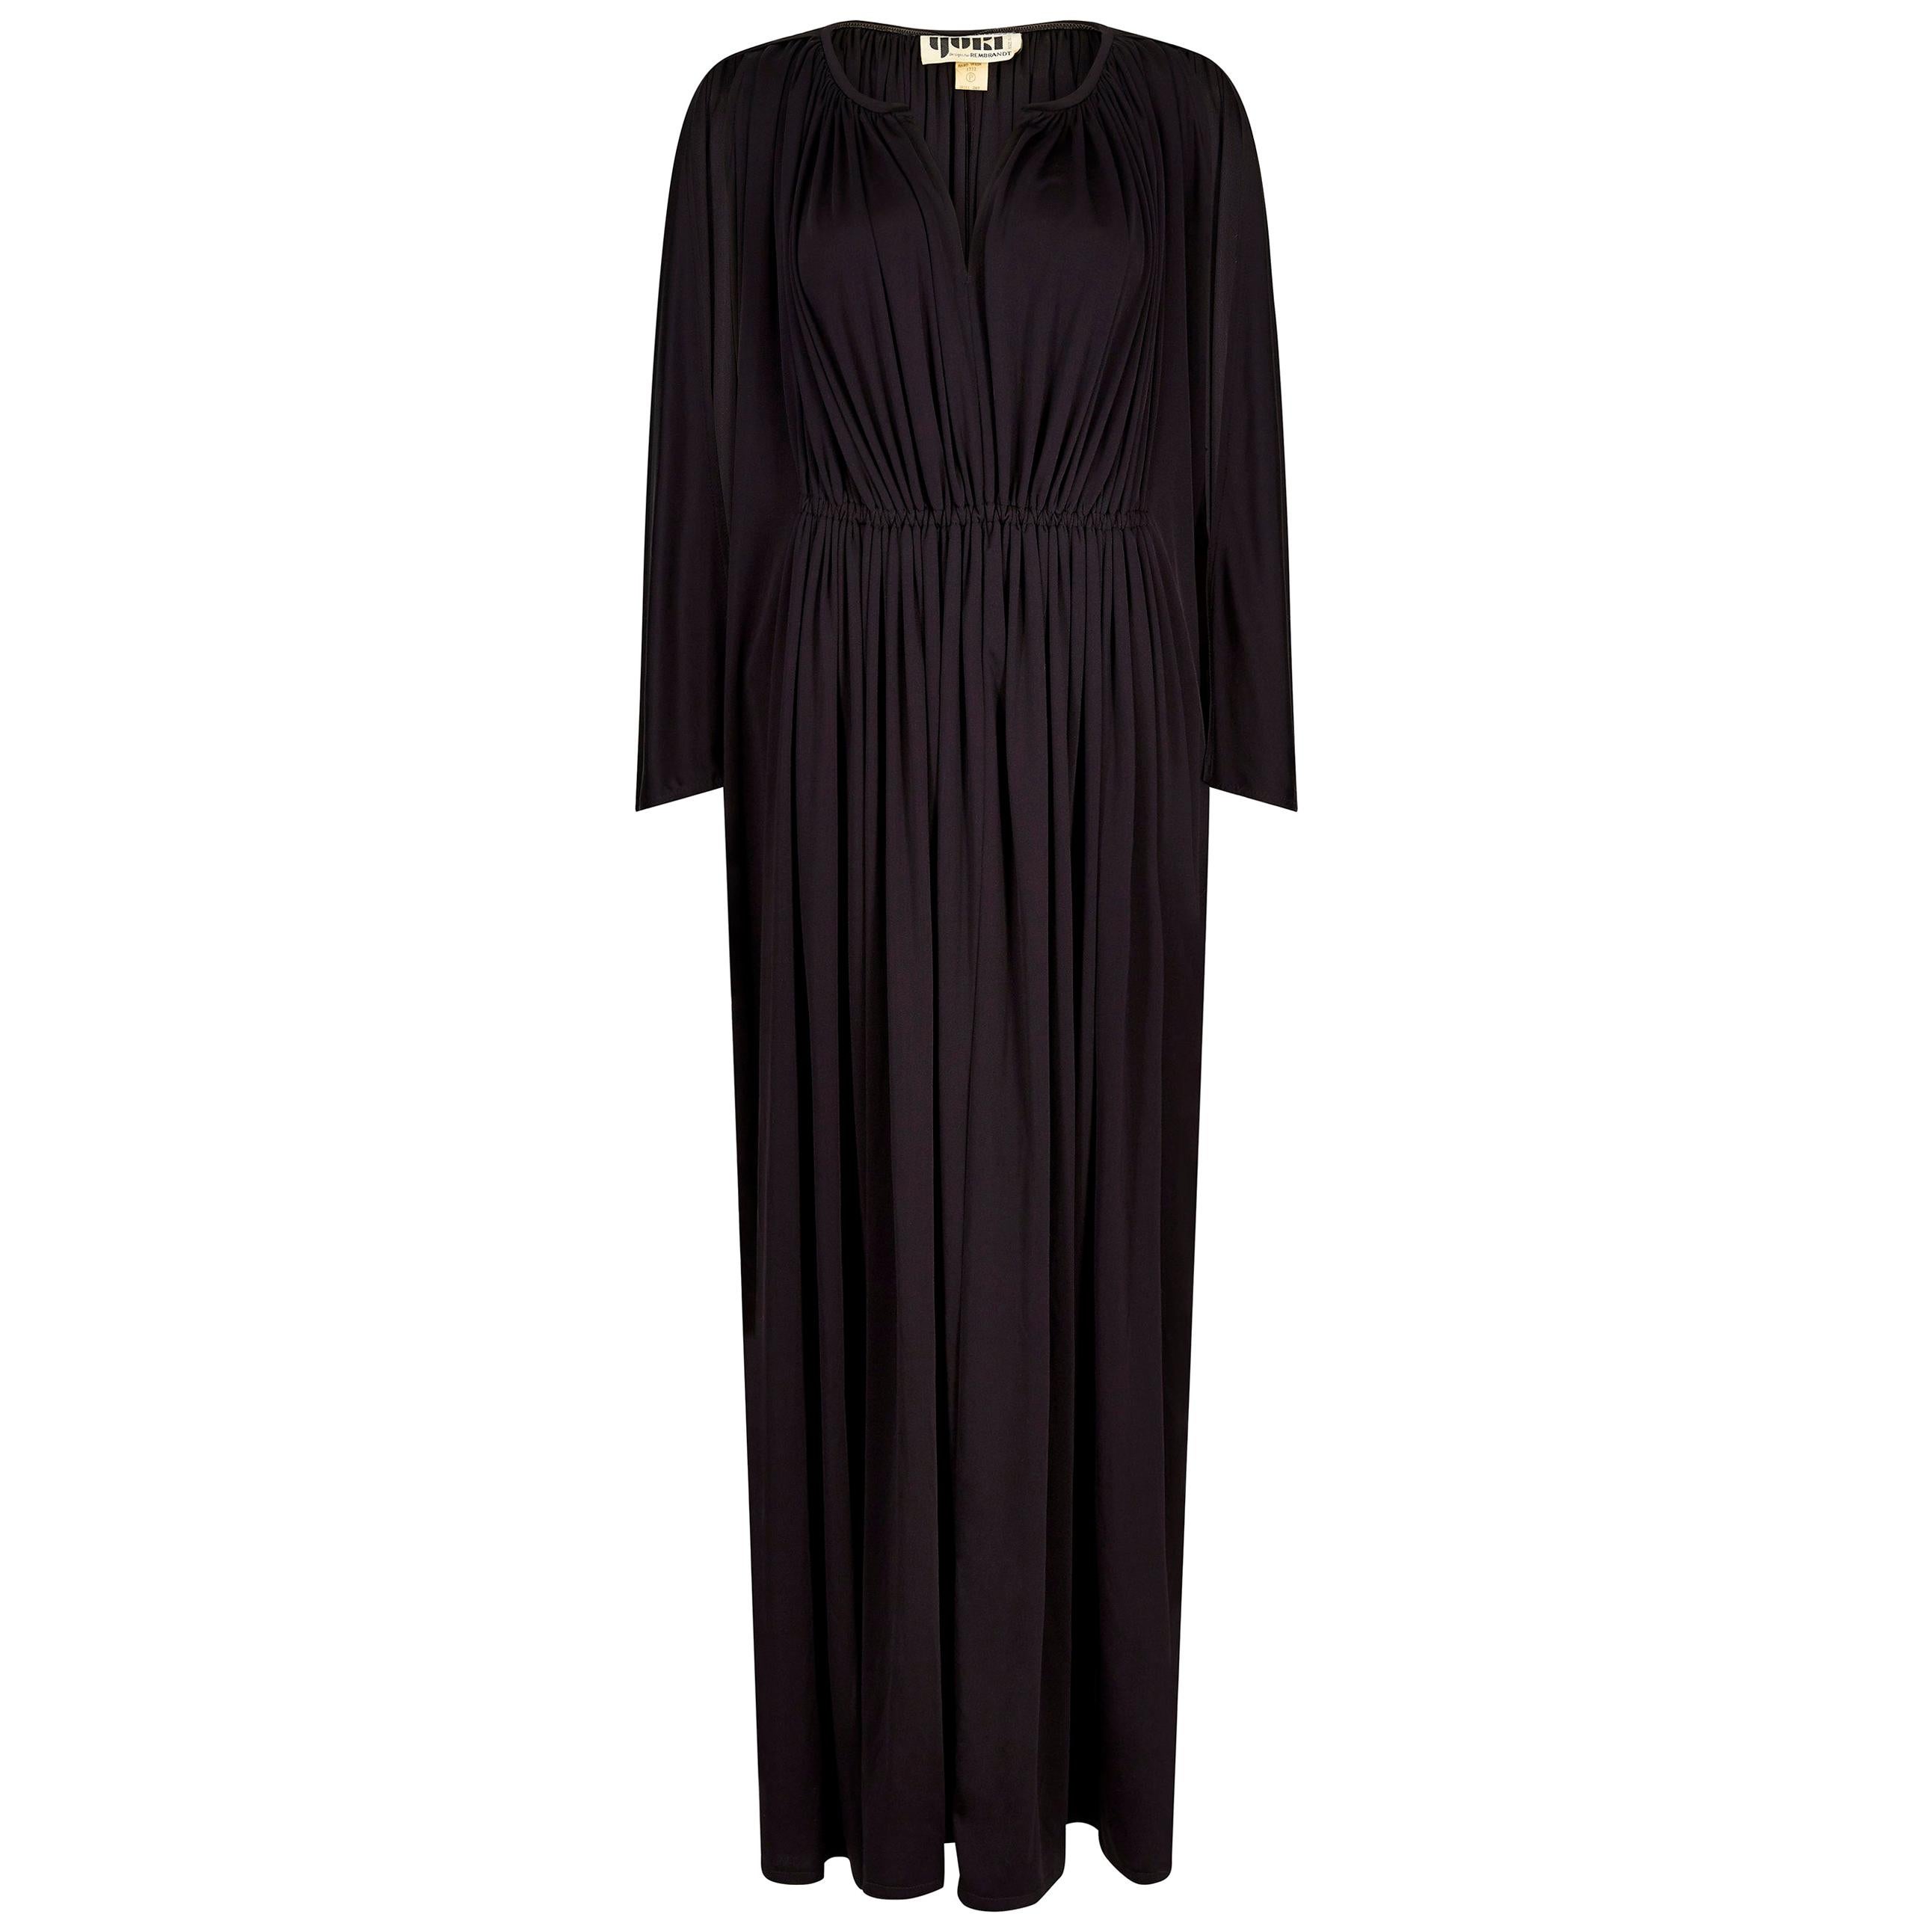 1970s Yuki For Rembrandt Draped Black Jersey Dress With Gathered Waistline